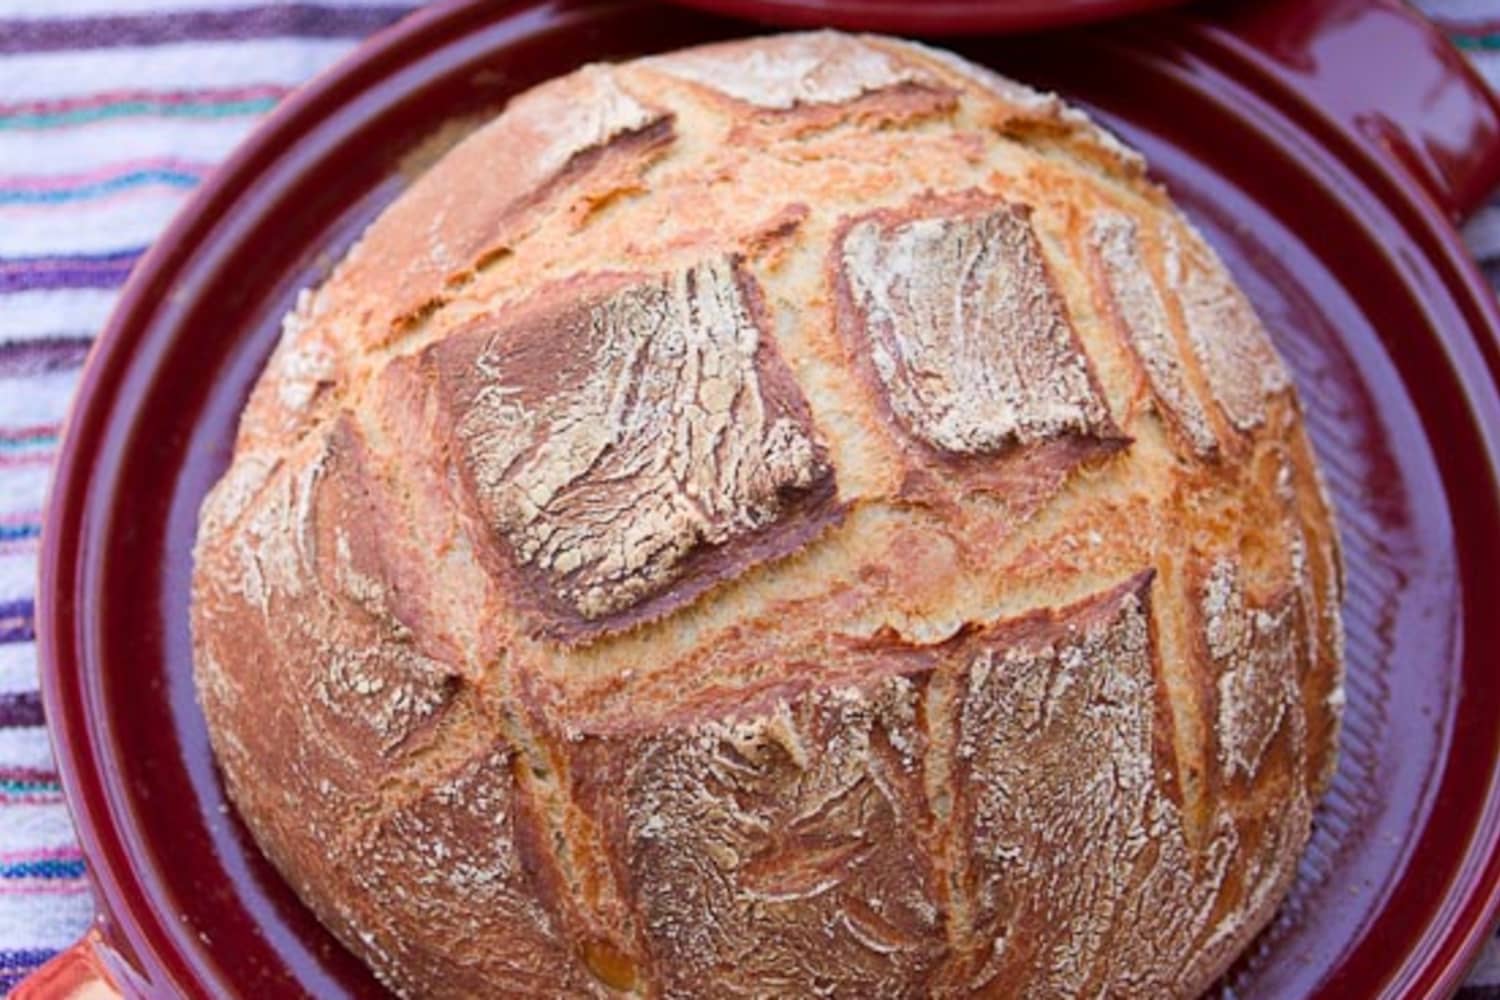 Weeknight Semolina Bread baked in a cloche - Bread Experience, Recipe